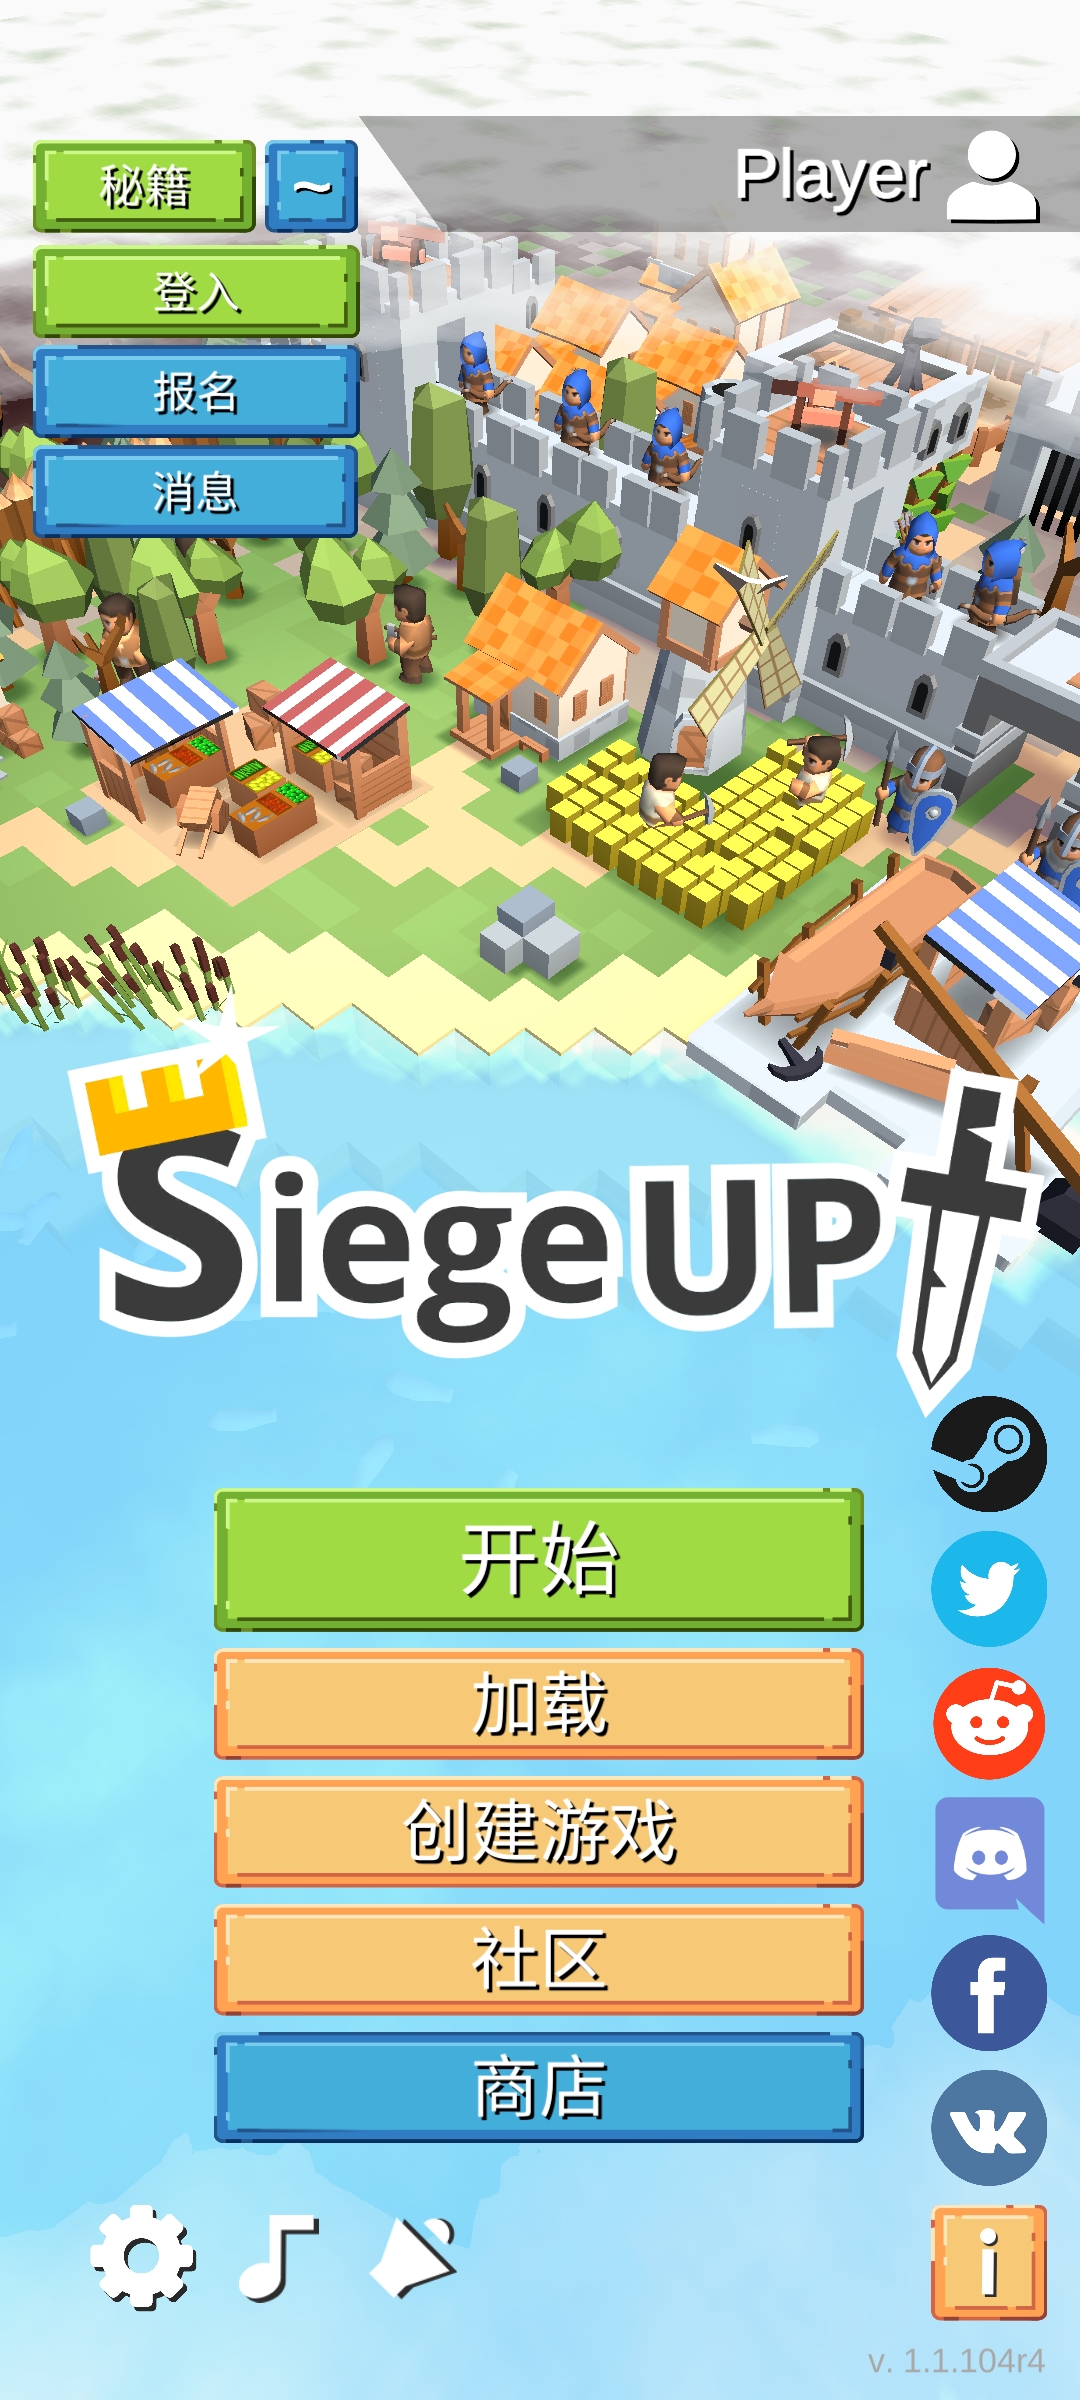 SiegeUp!RTSϷٷv1.1.106r5 °